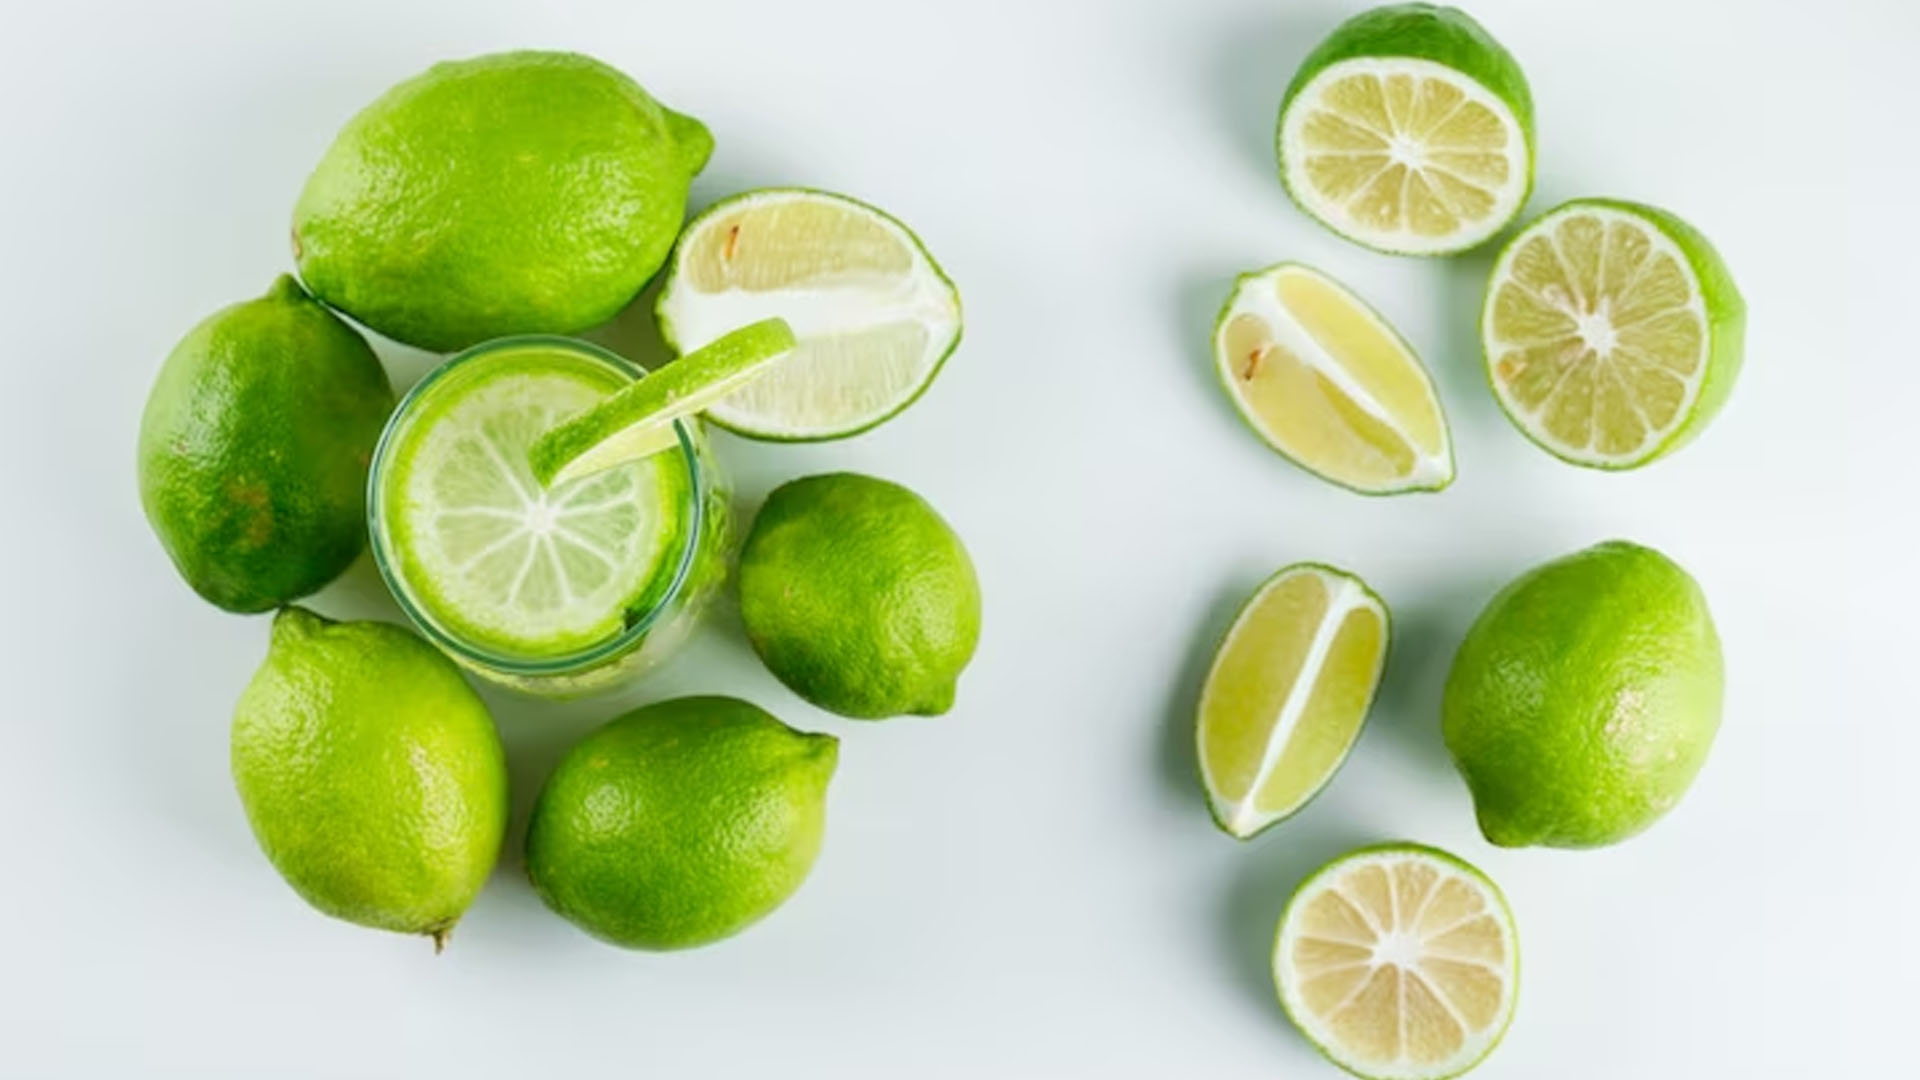 Do Limes Have the Same Health benefits as lemons?